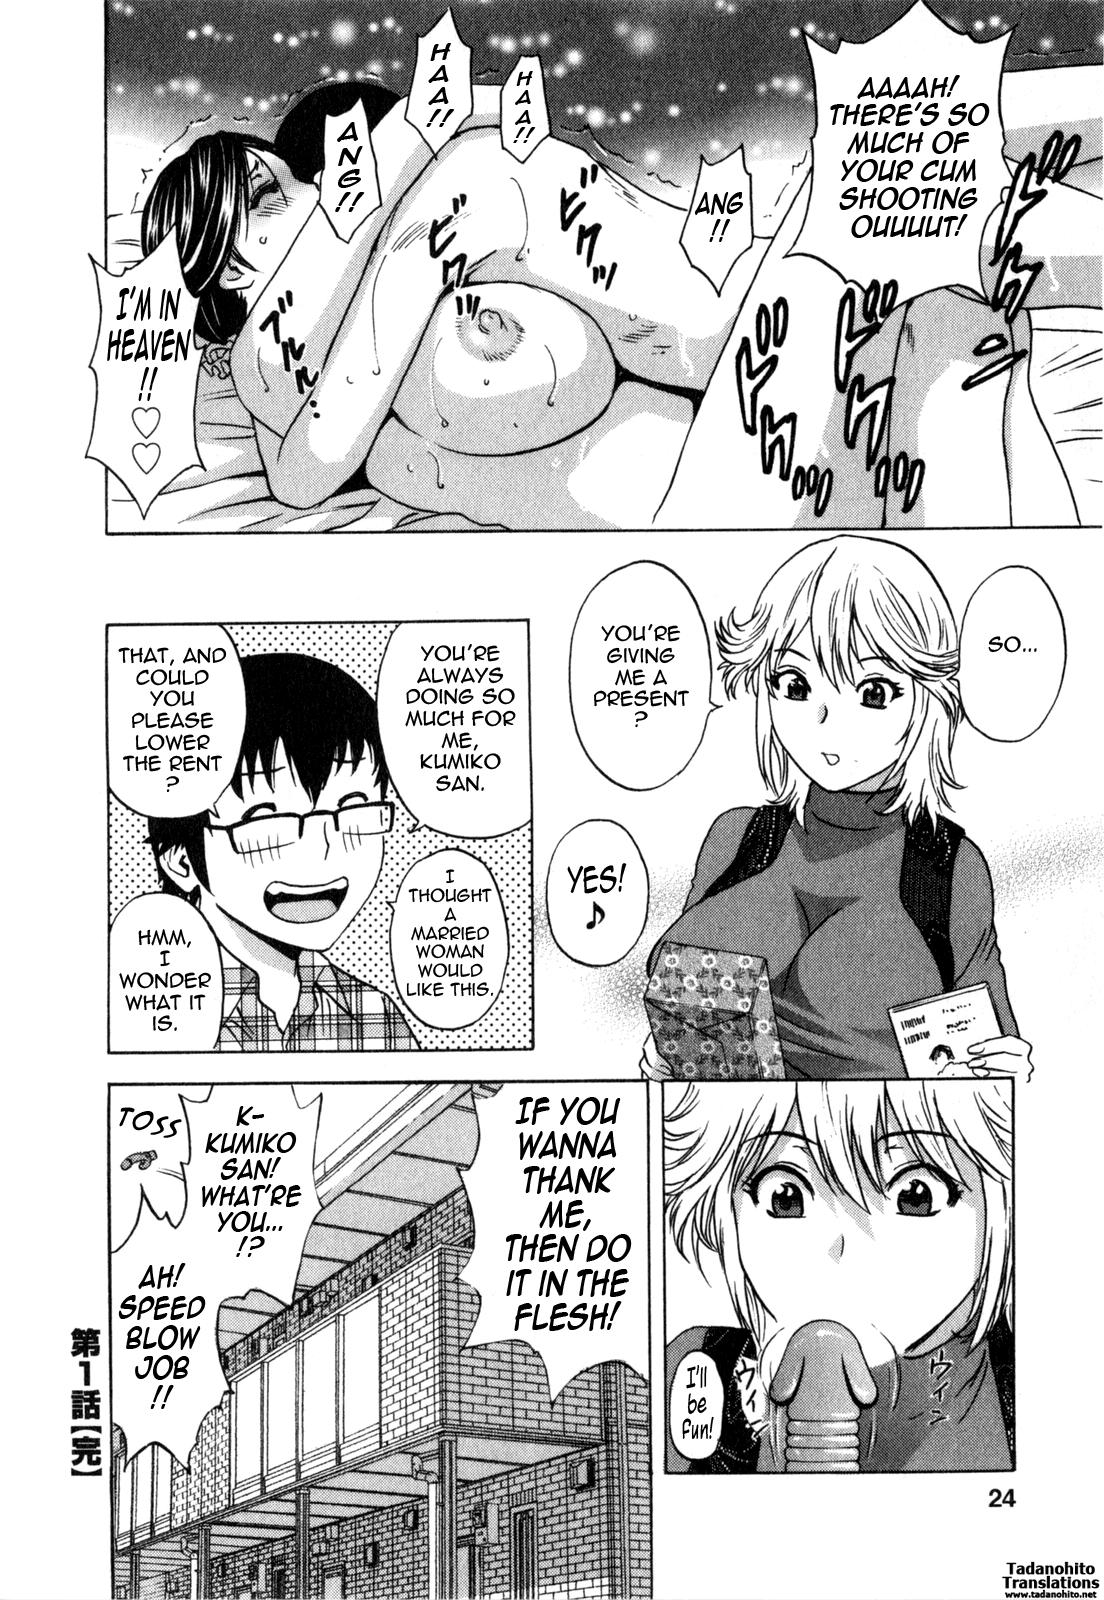 [Hidemaru] Life with Married Women Just Like a Manga 3 - Ch. 1-2 [English] {Tadanohito} 26